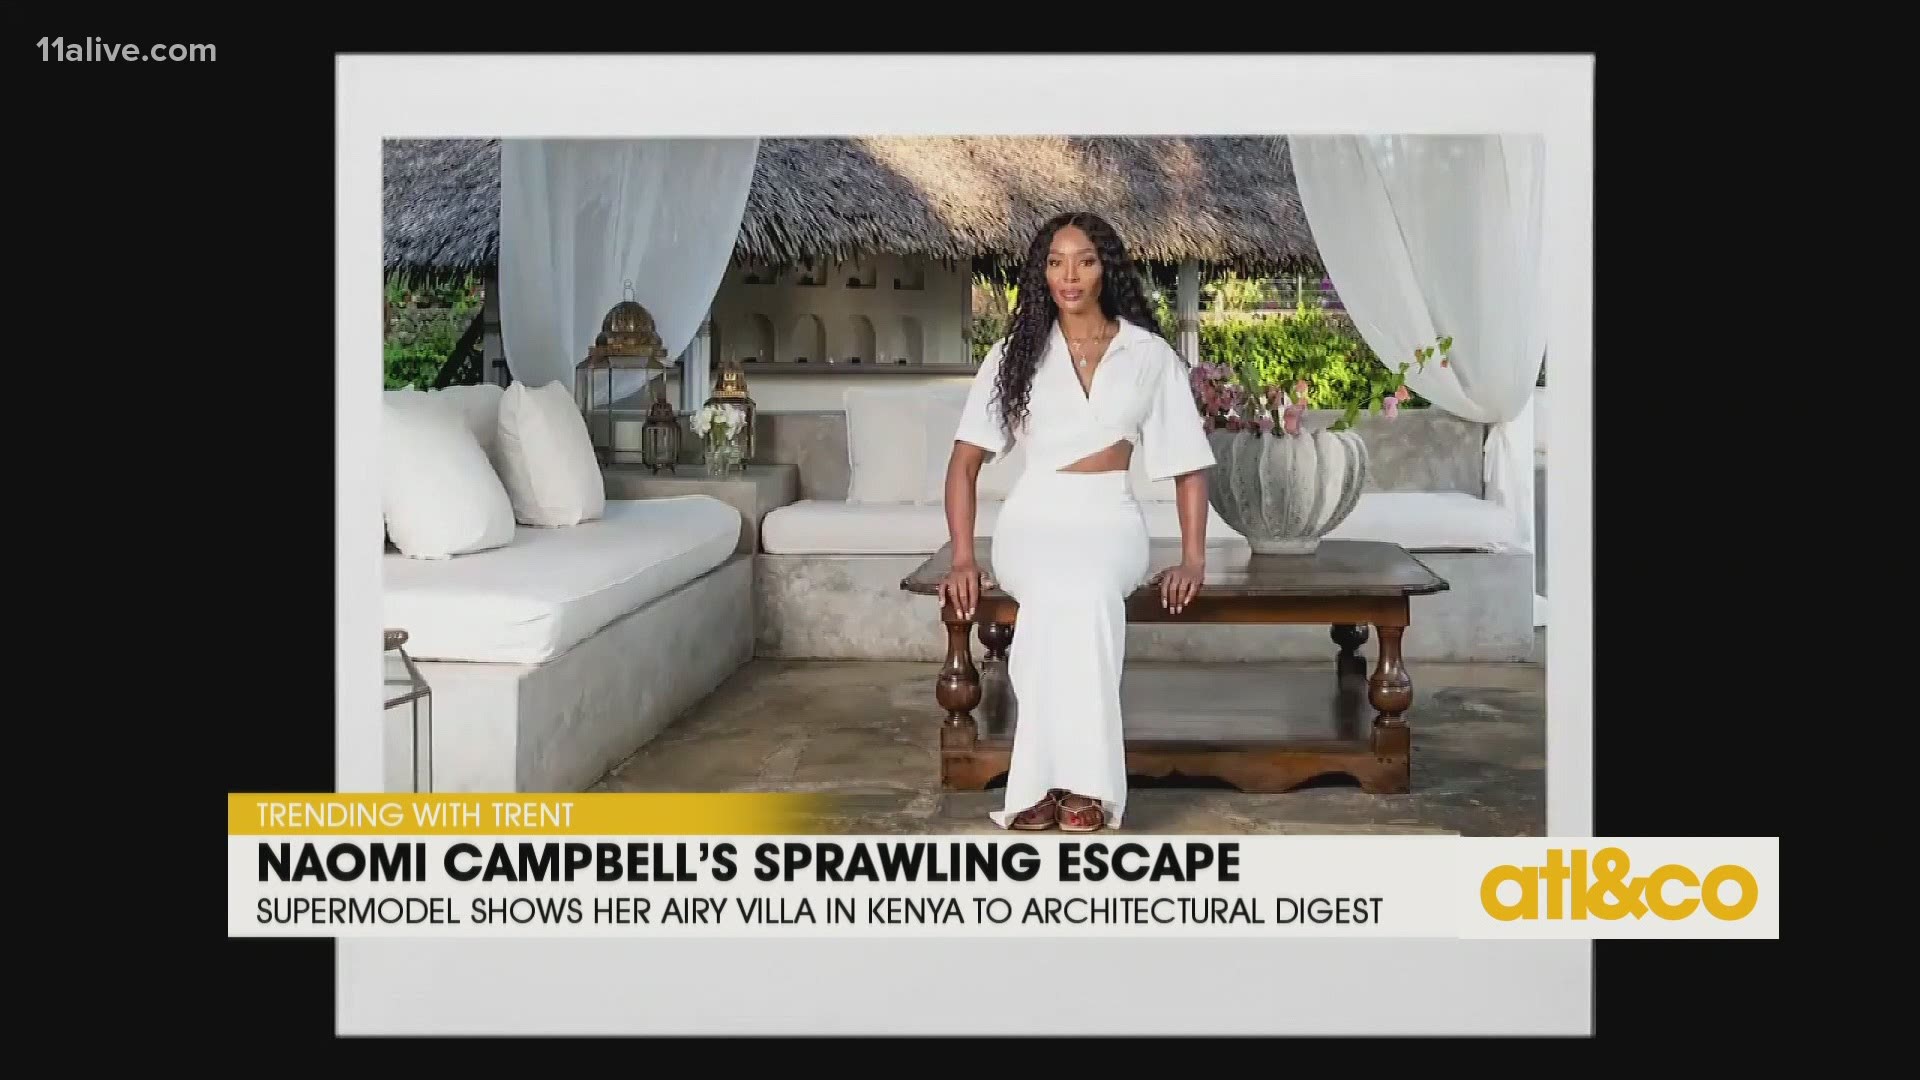 Architectural Digest takes us inside supermodel Naomi Campbell's beautiful airy villa in Malindi, Kenya.